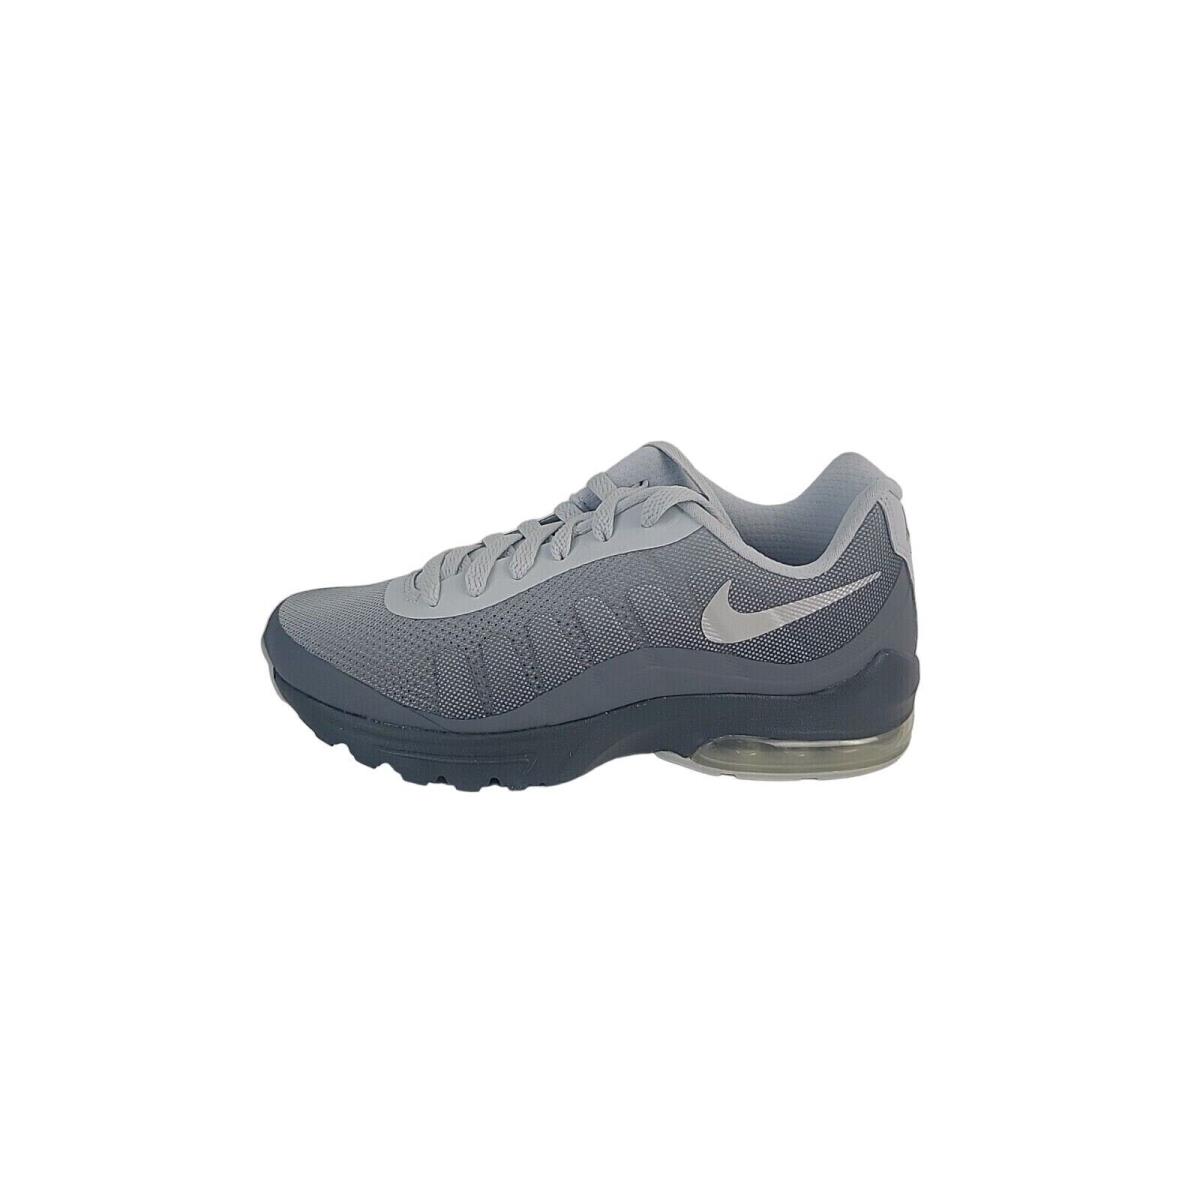 Nike Women`s Air Max 749862 007 Invigor Print Shoes Athletic Sneakers Gray Sz 5